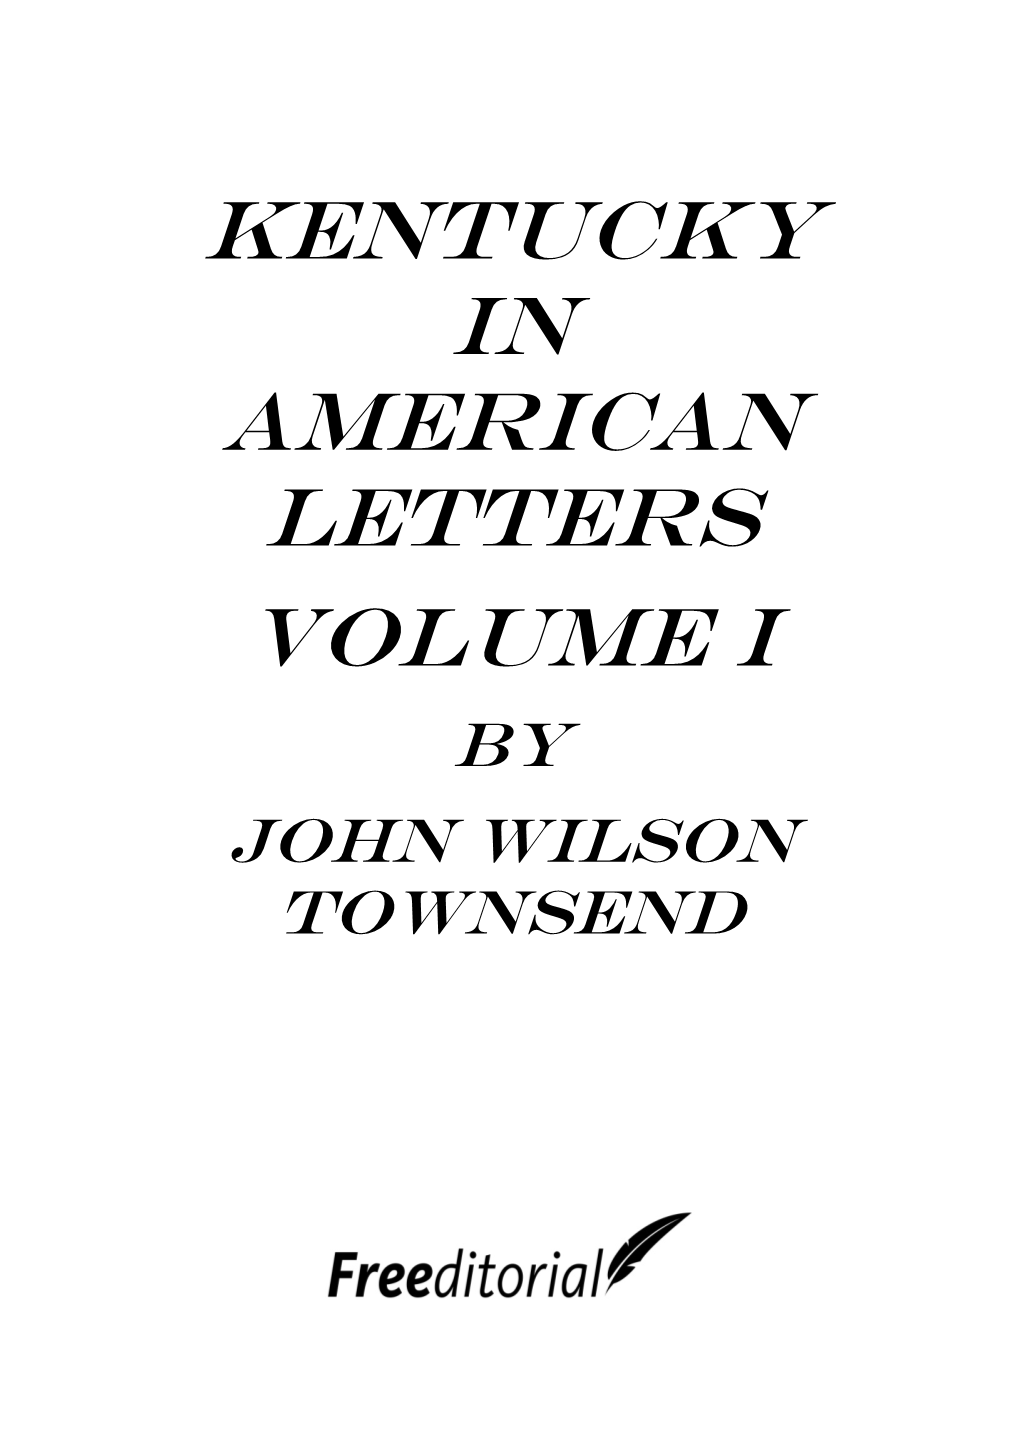 KENTUCKY in AMERICAN LETTERS Volume I by JOHN WILSON TOWNSEND